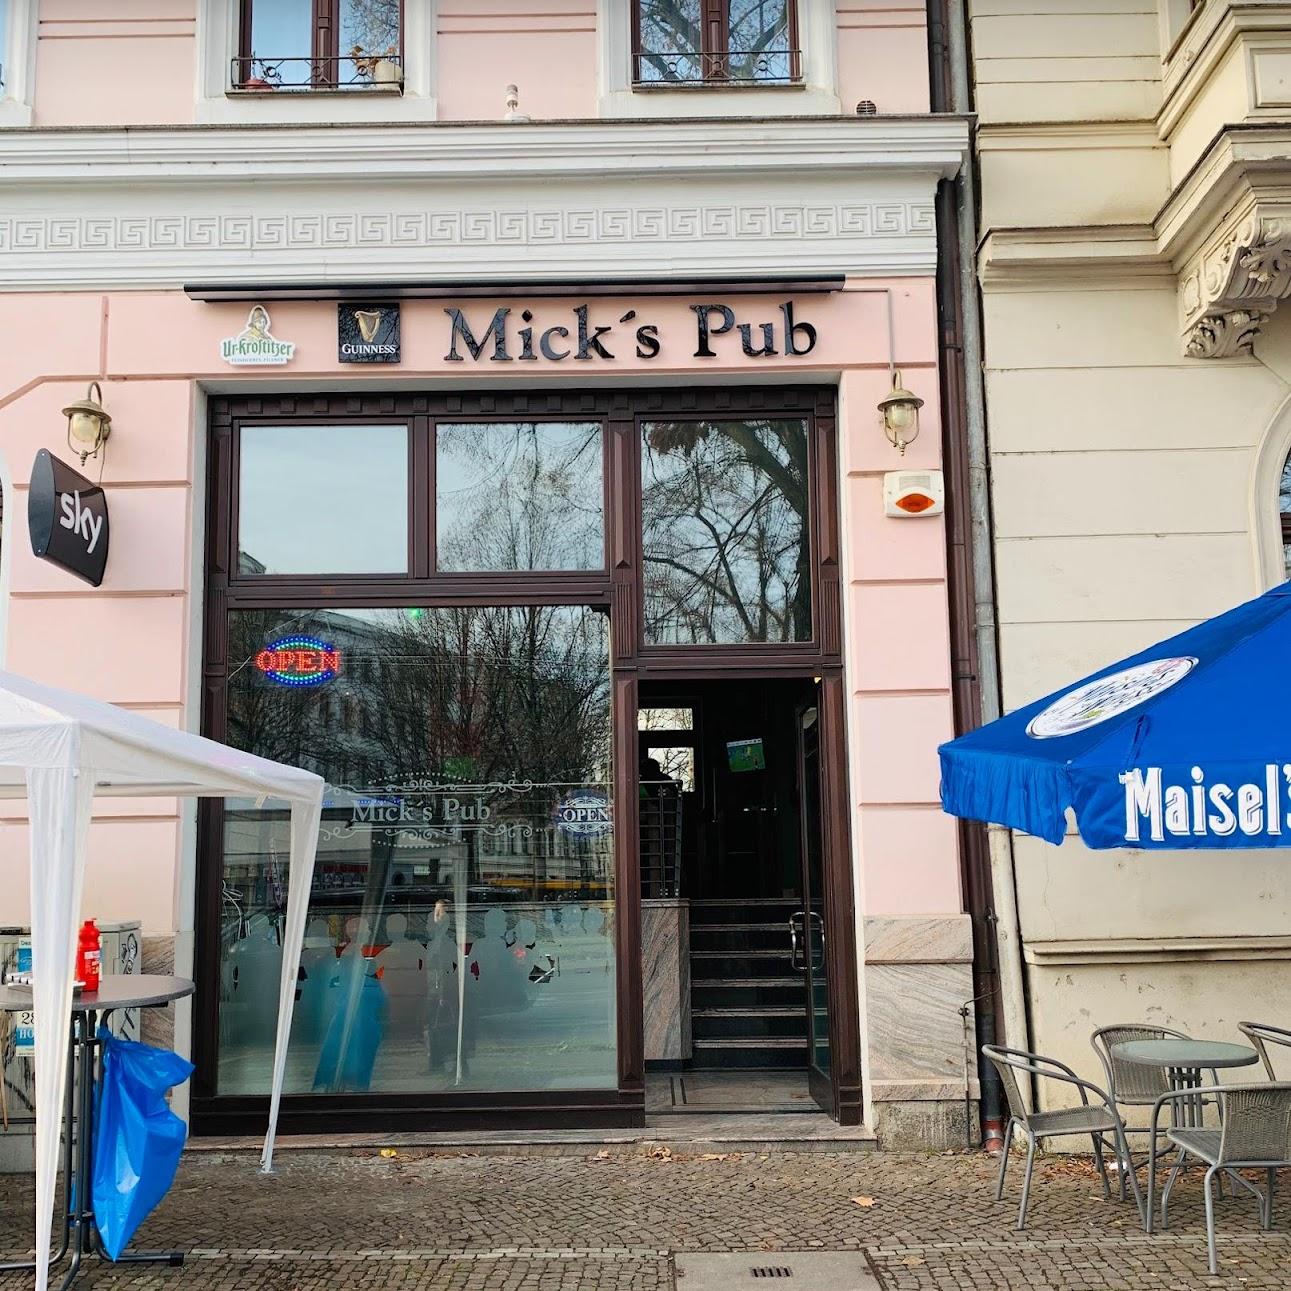 Restaurant "Mick